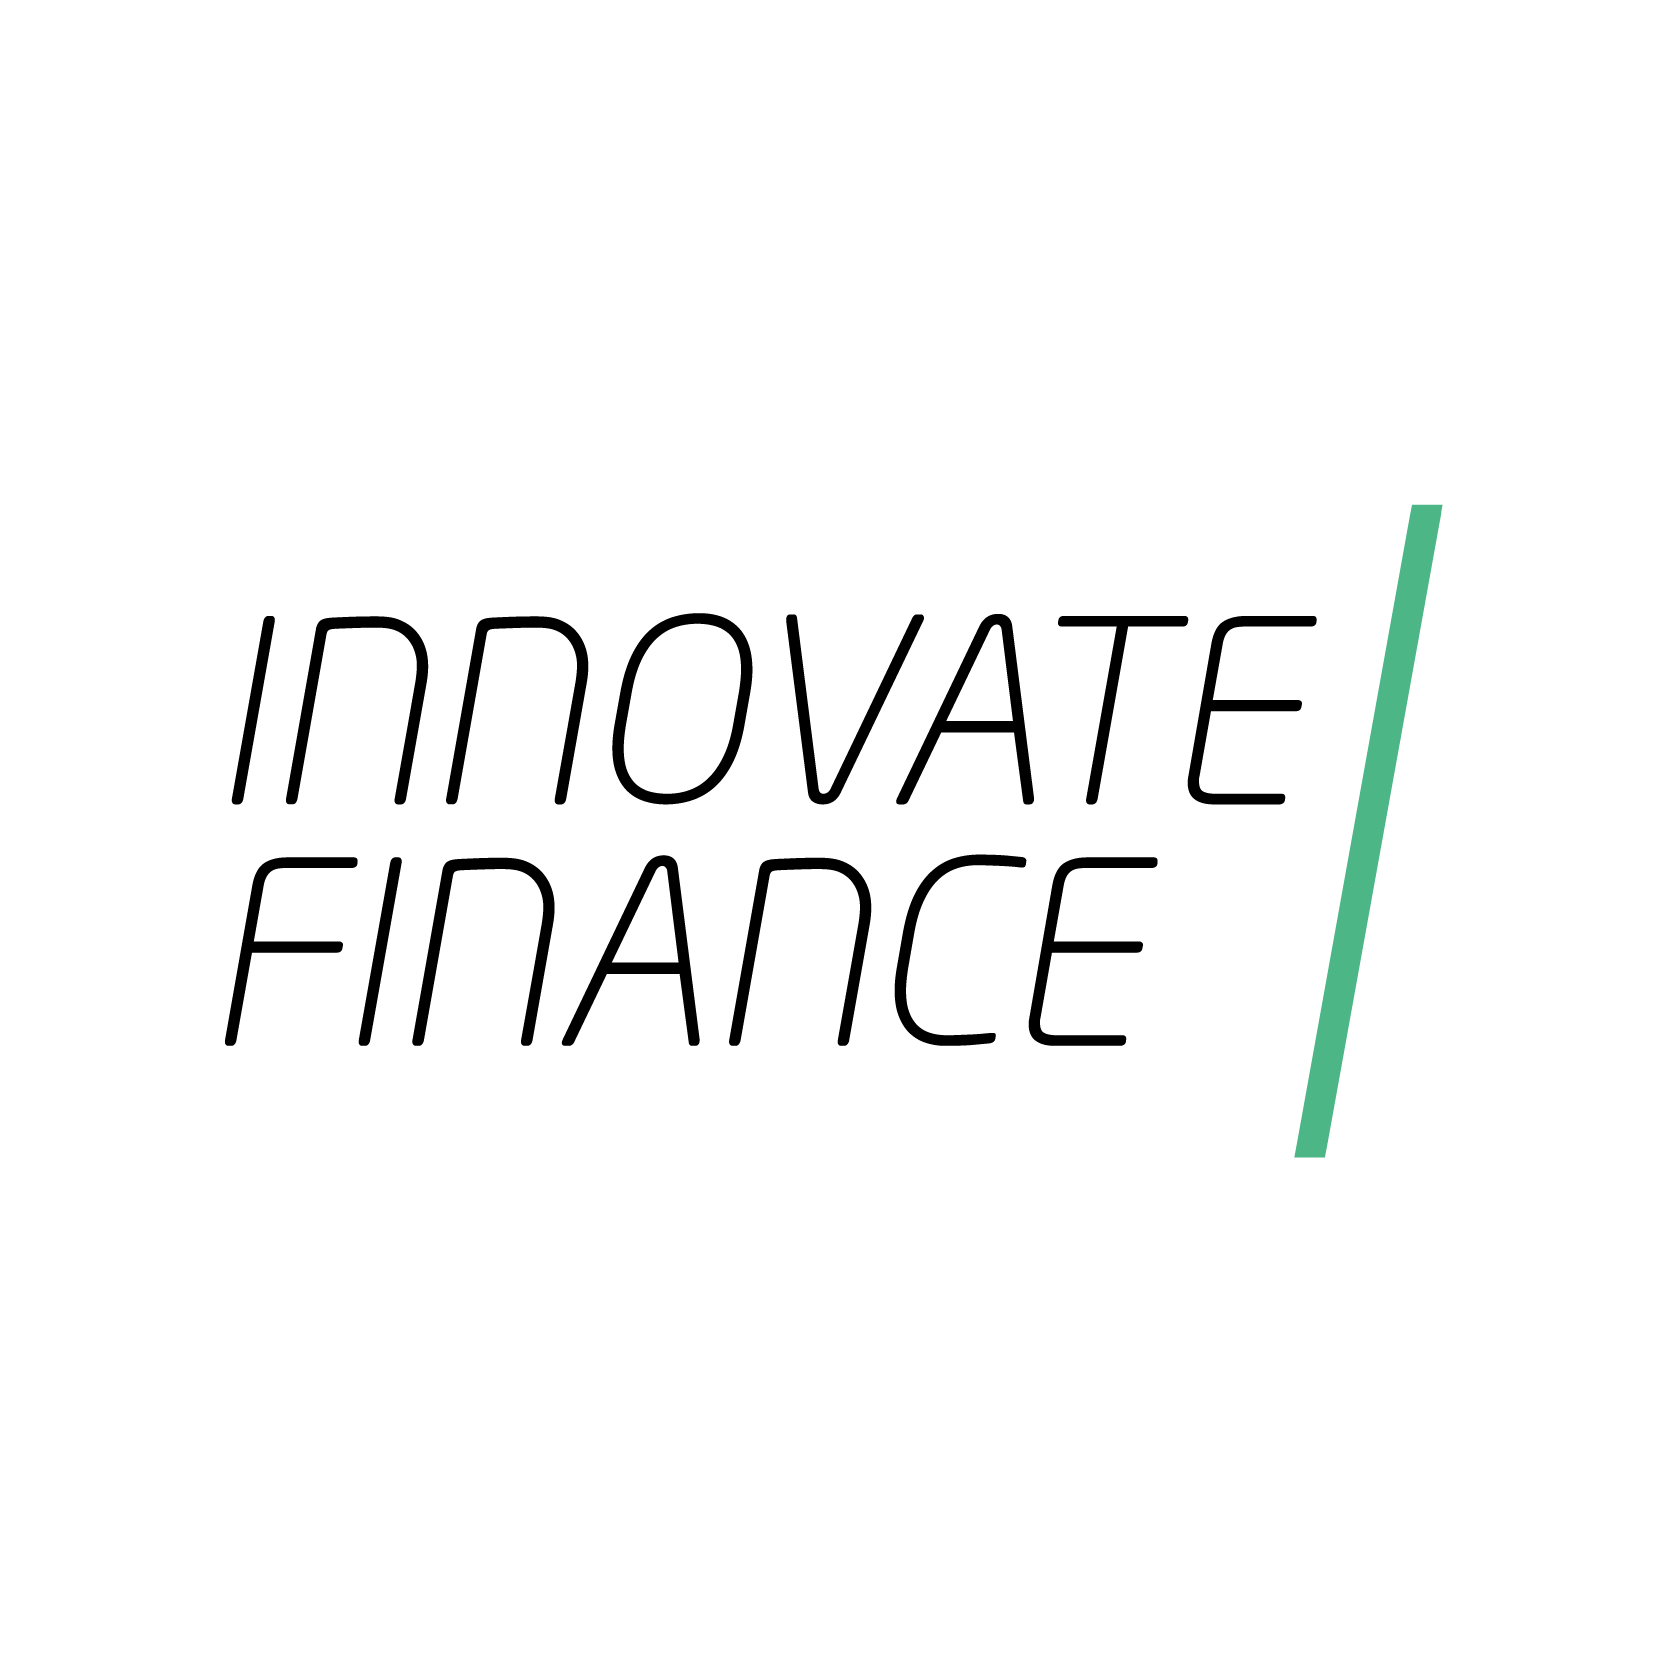 Innovate Finance logo